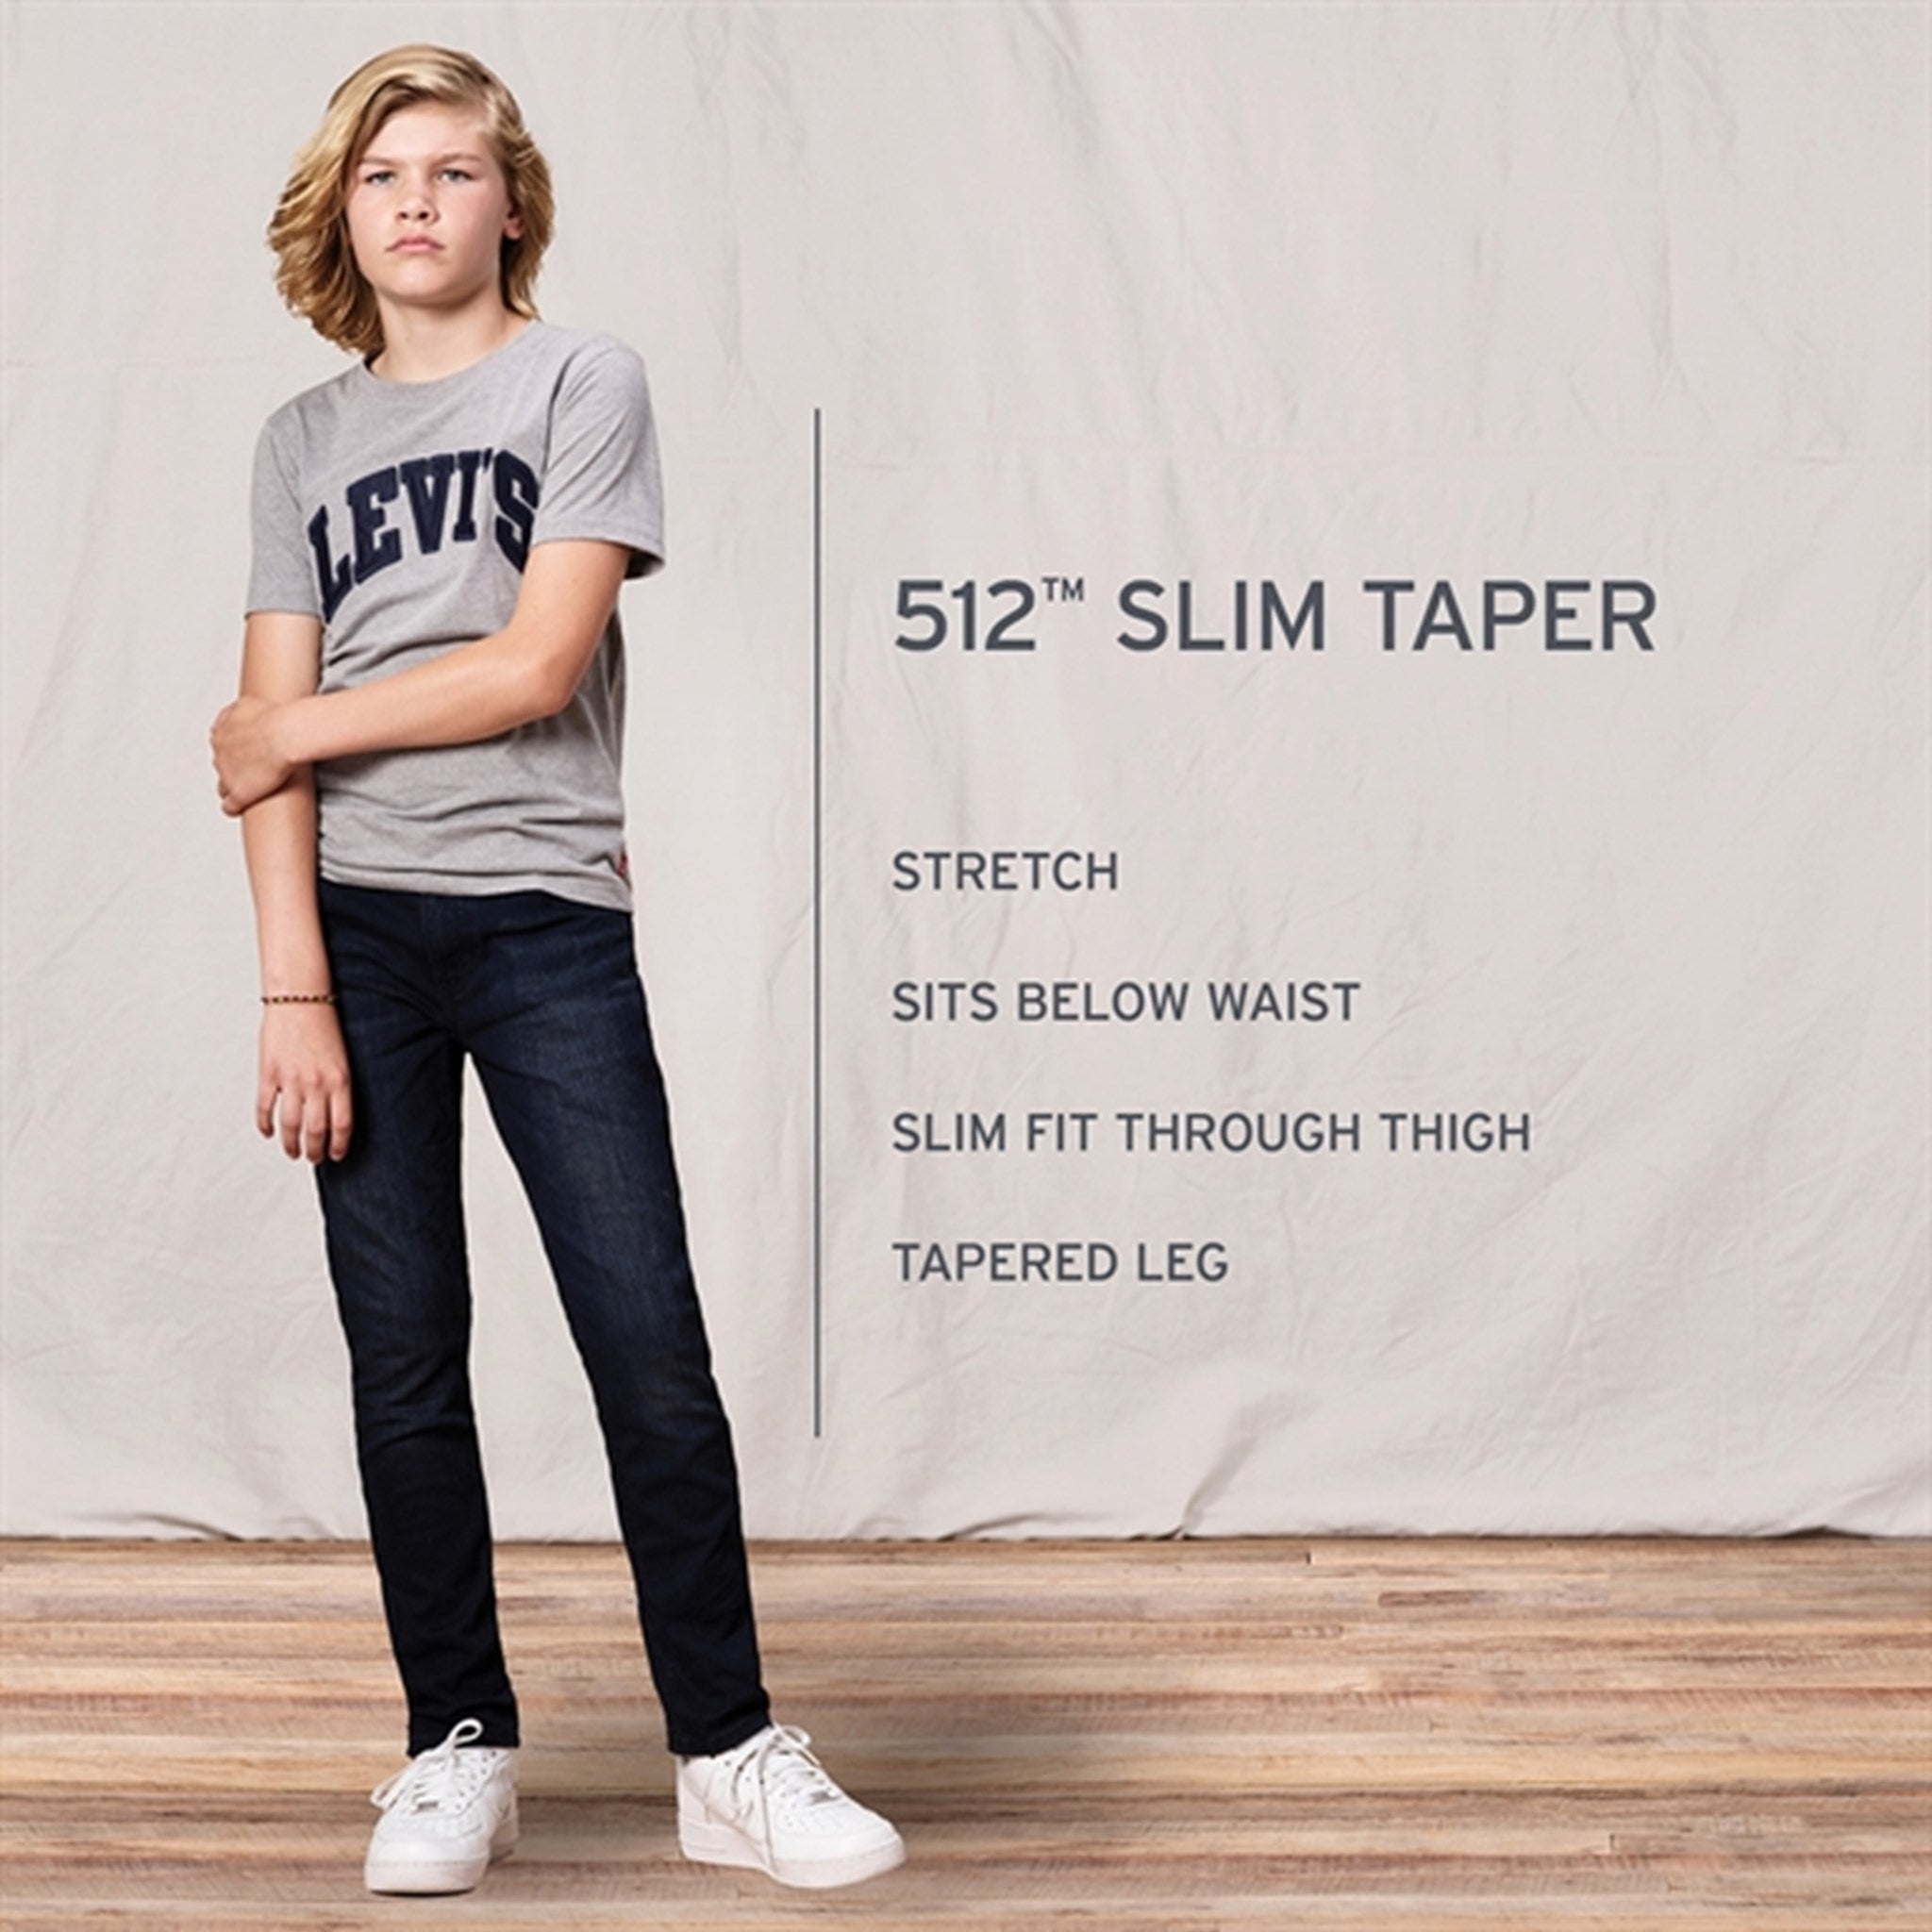 Levi's 512 Slim Taper Jeans Route 66 2